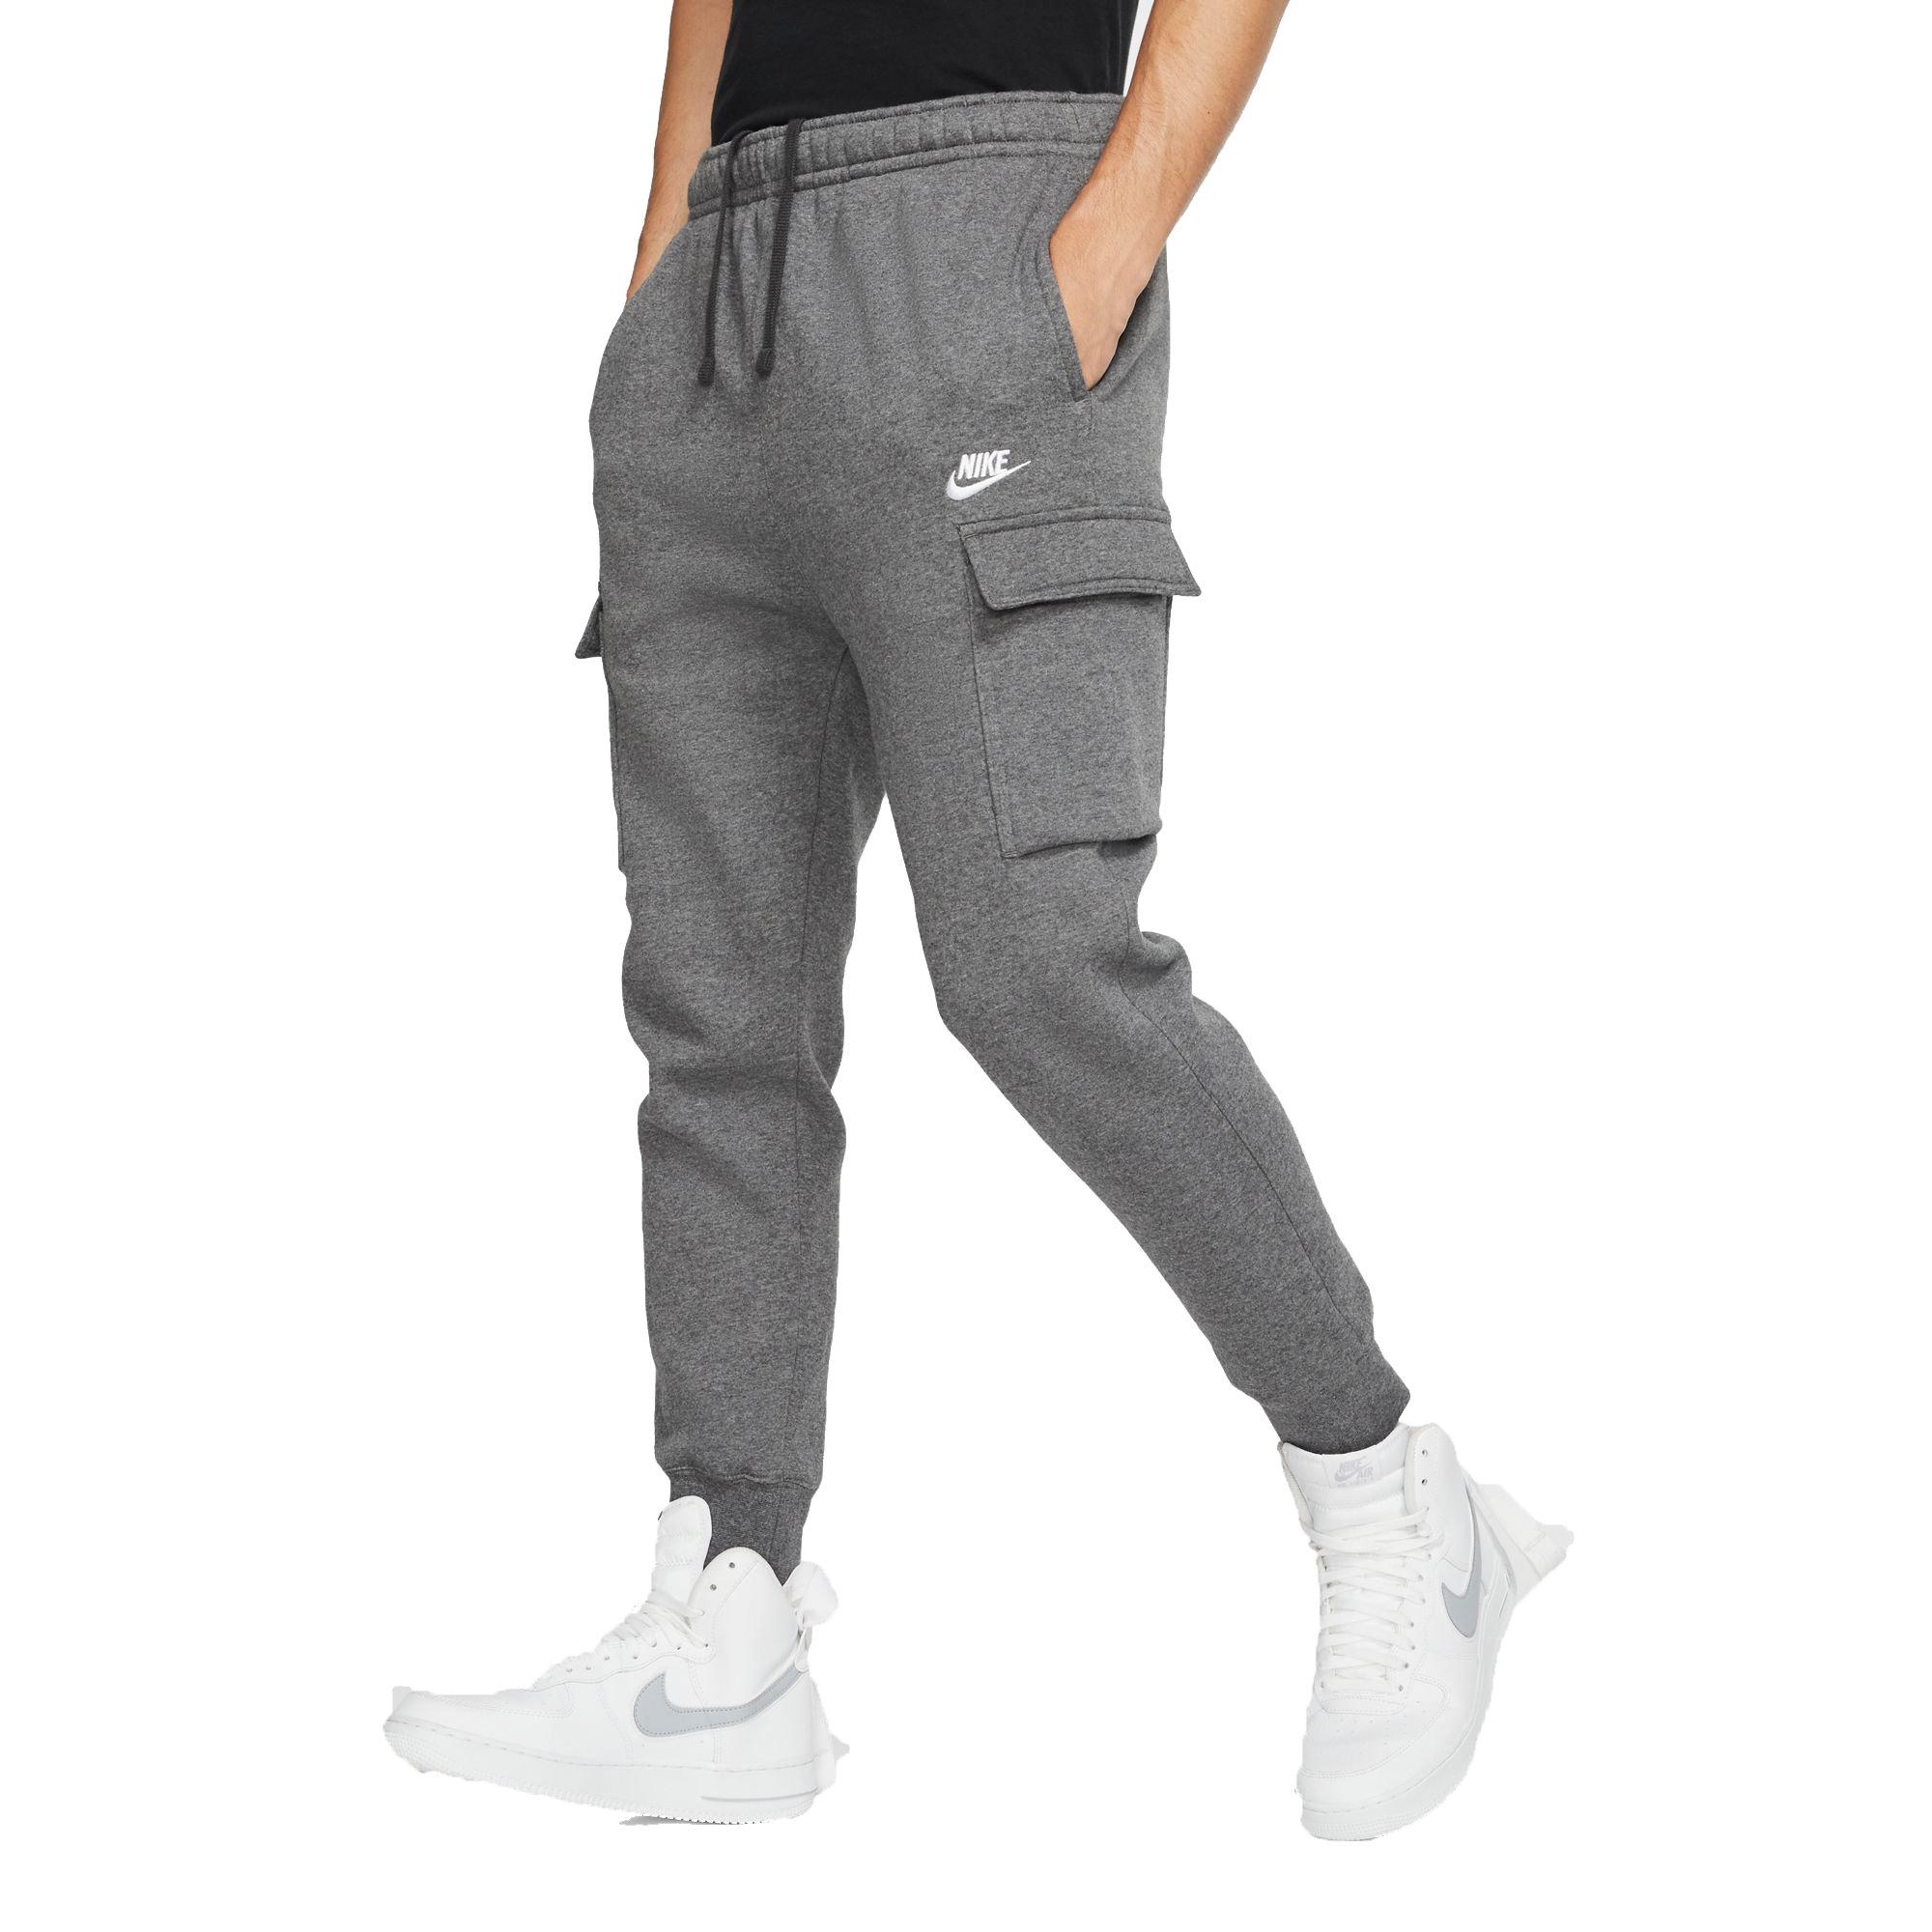 Nike Essentials Fleece cuffed cargo sweatpants in white heather - WHITE